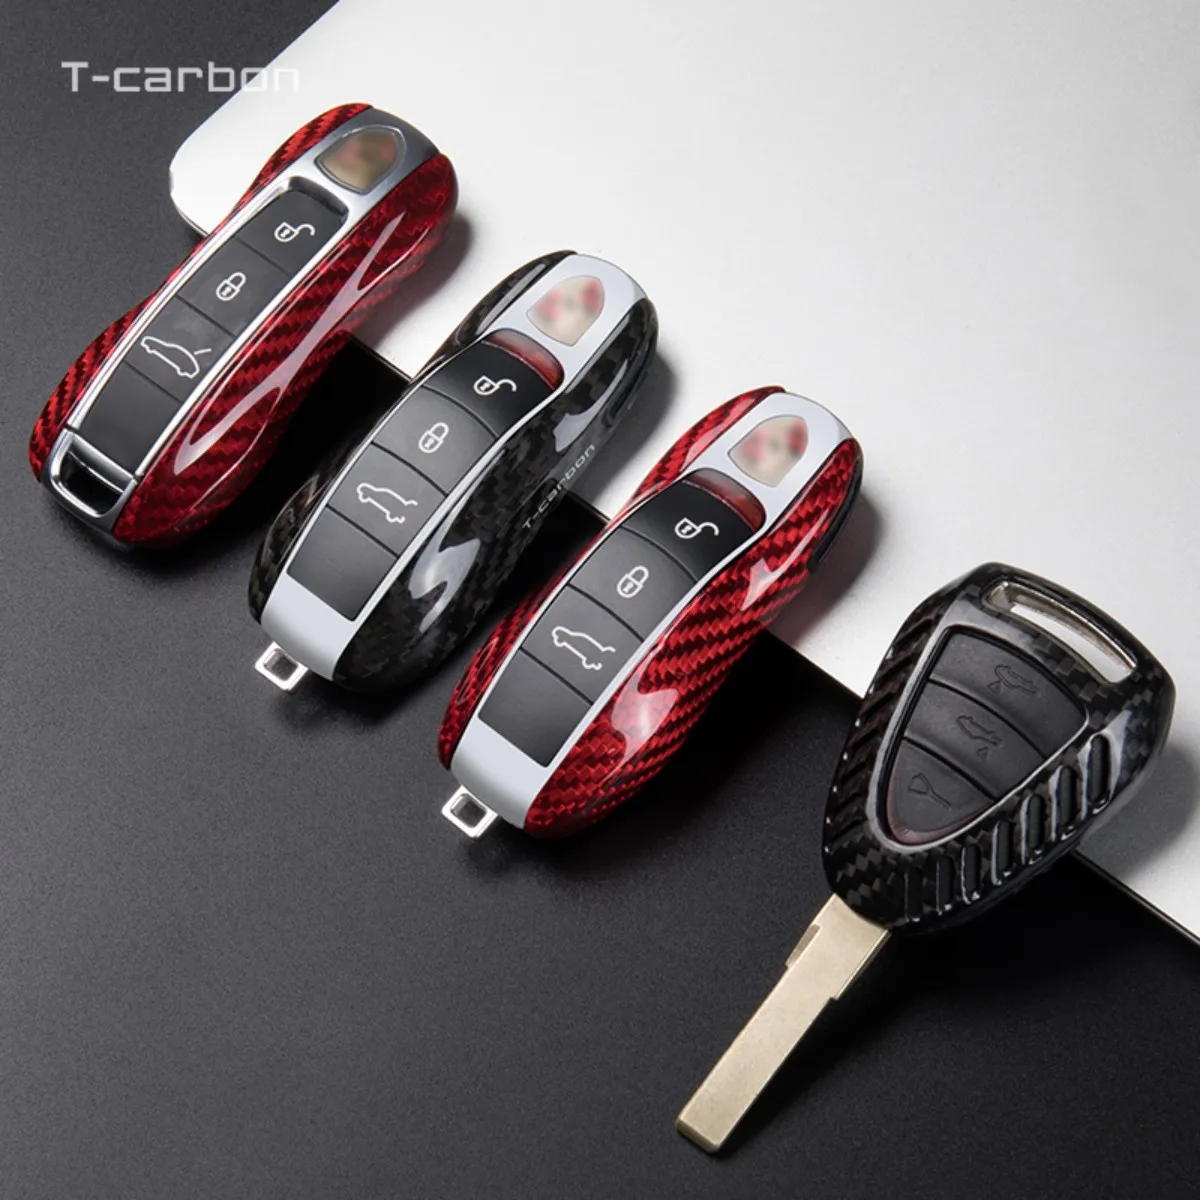 T-carbon Carbon Fiber Porsche Key Cover Key Fob Cover India